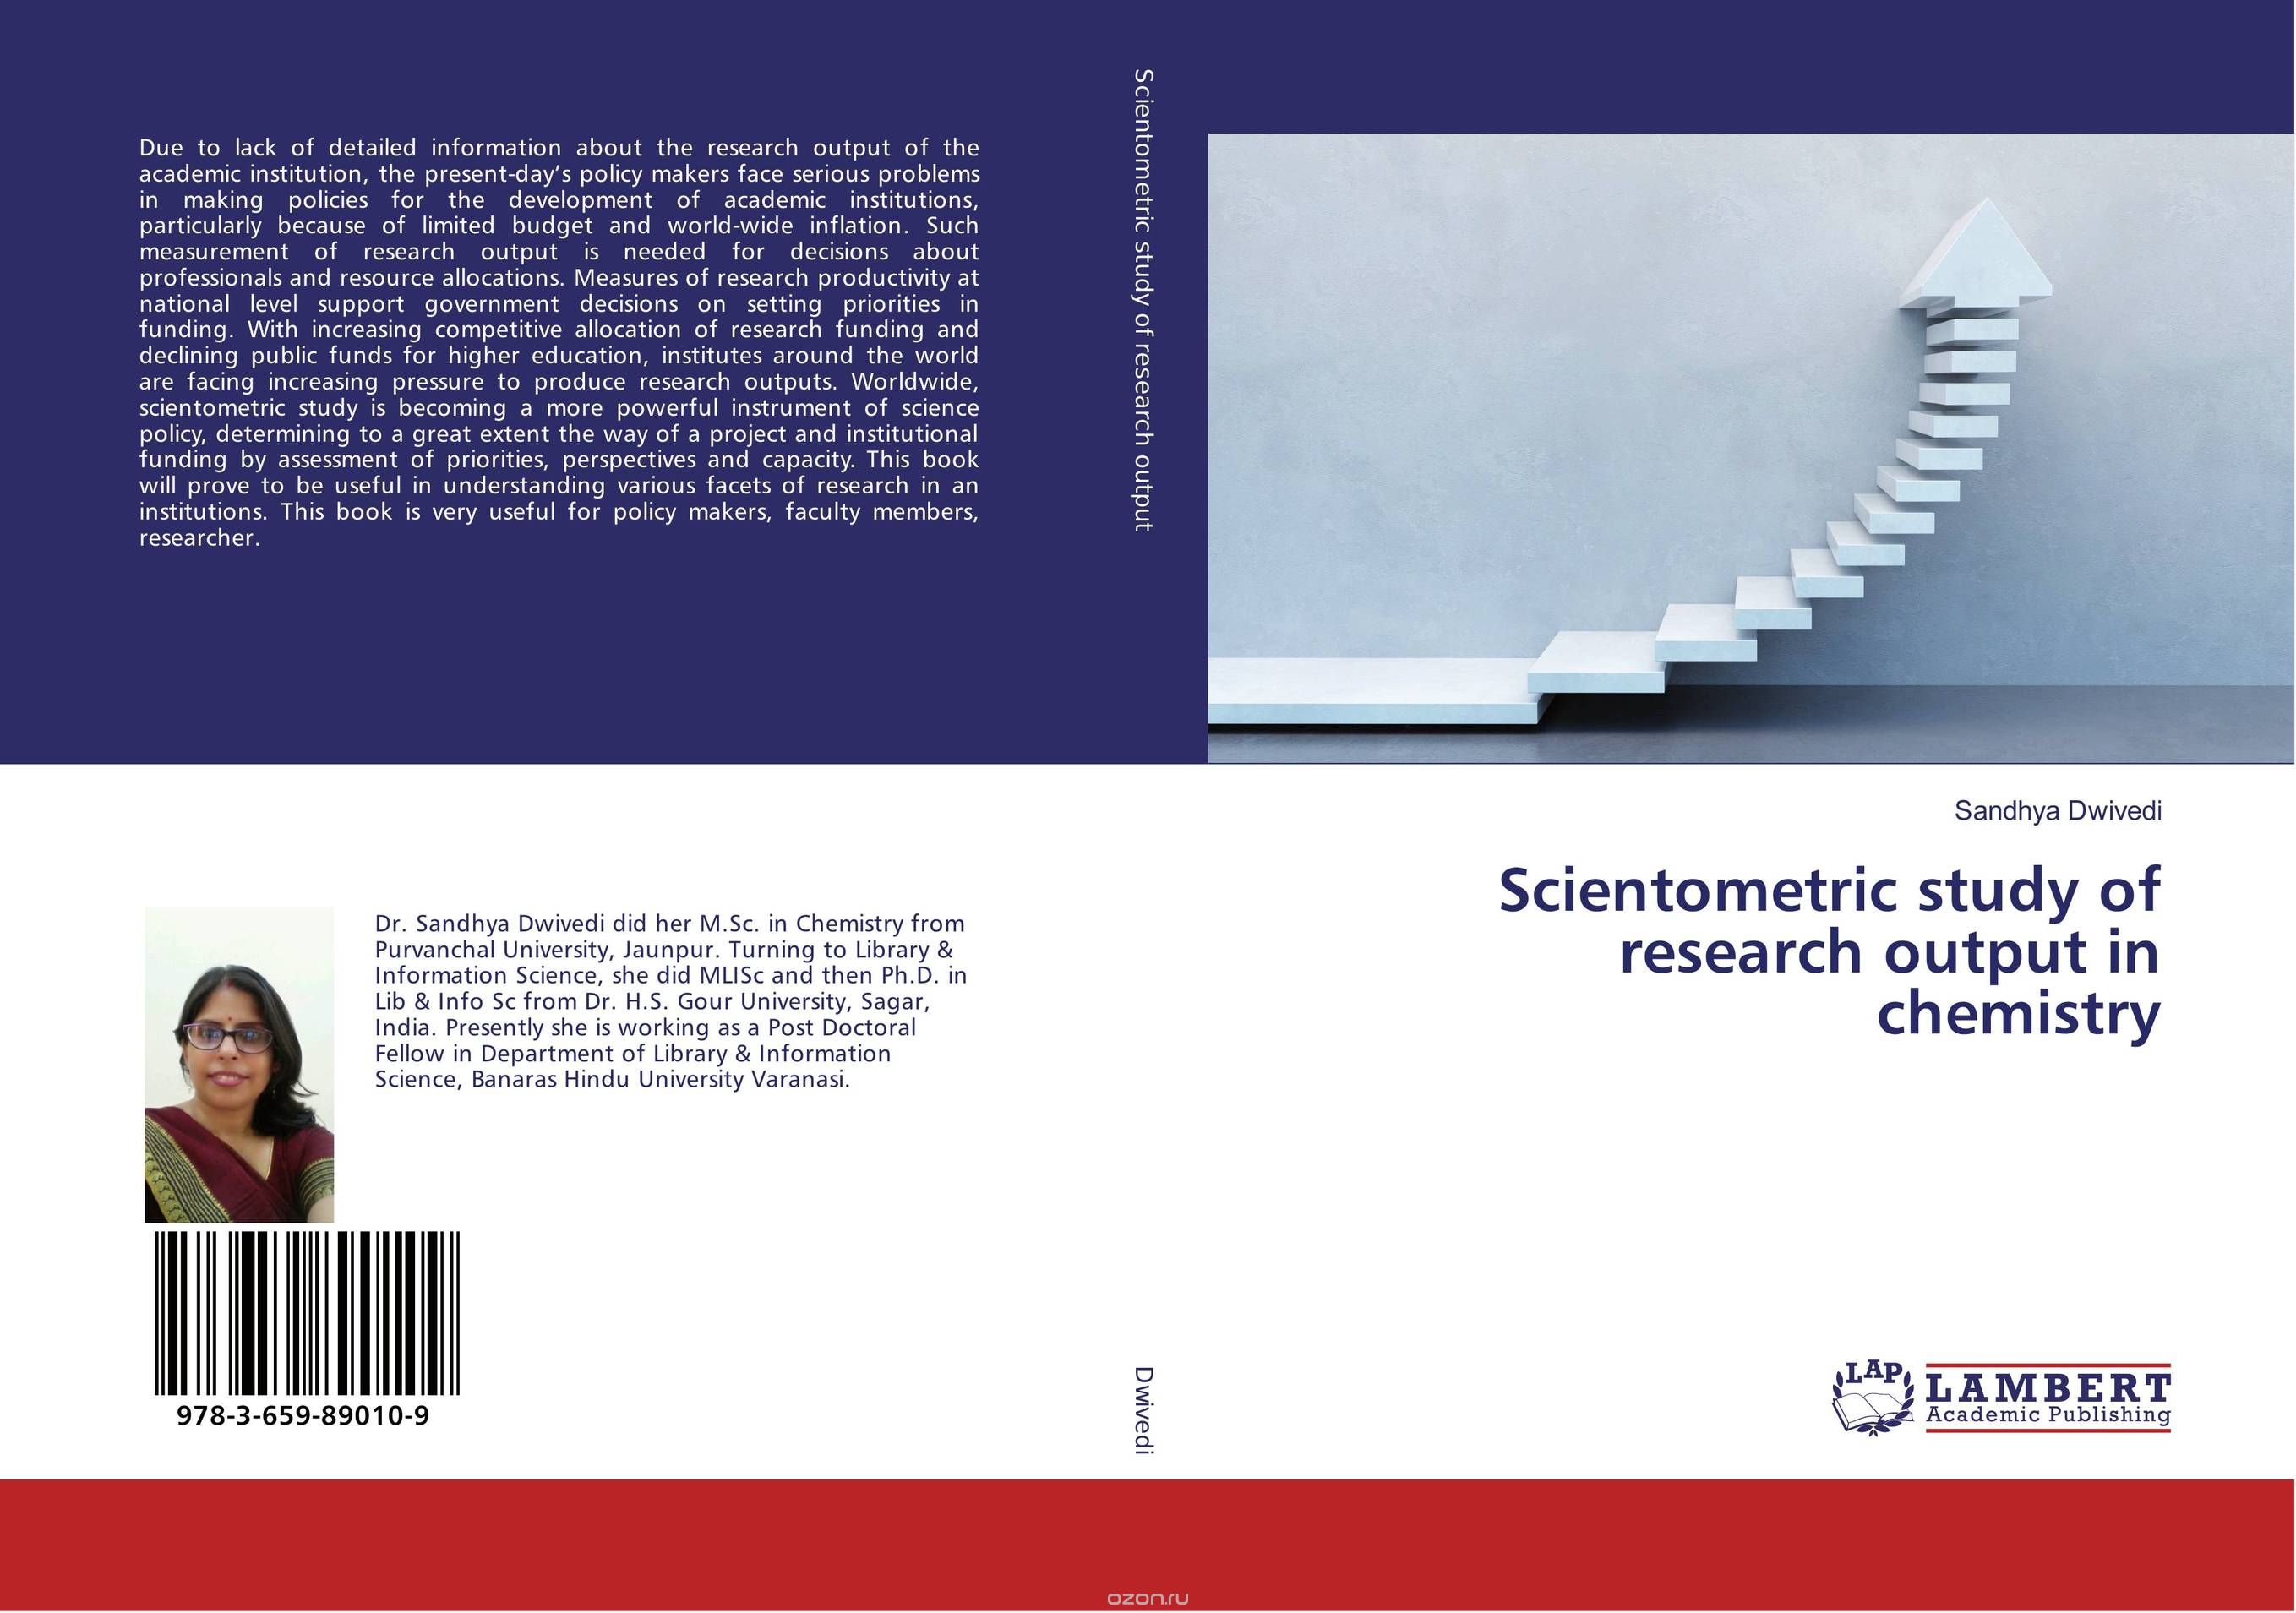 Скачать книгу "Scientometric study of research output in chemistry"